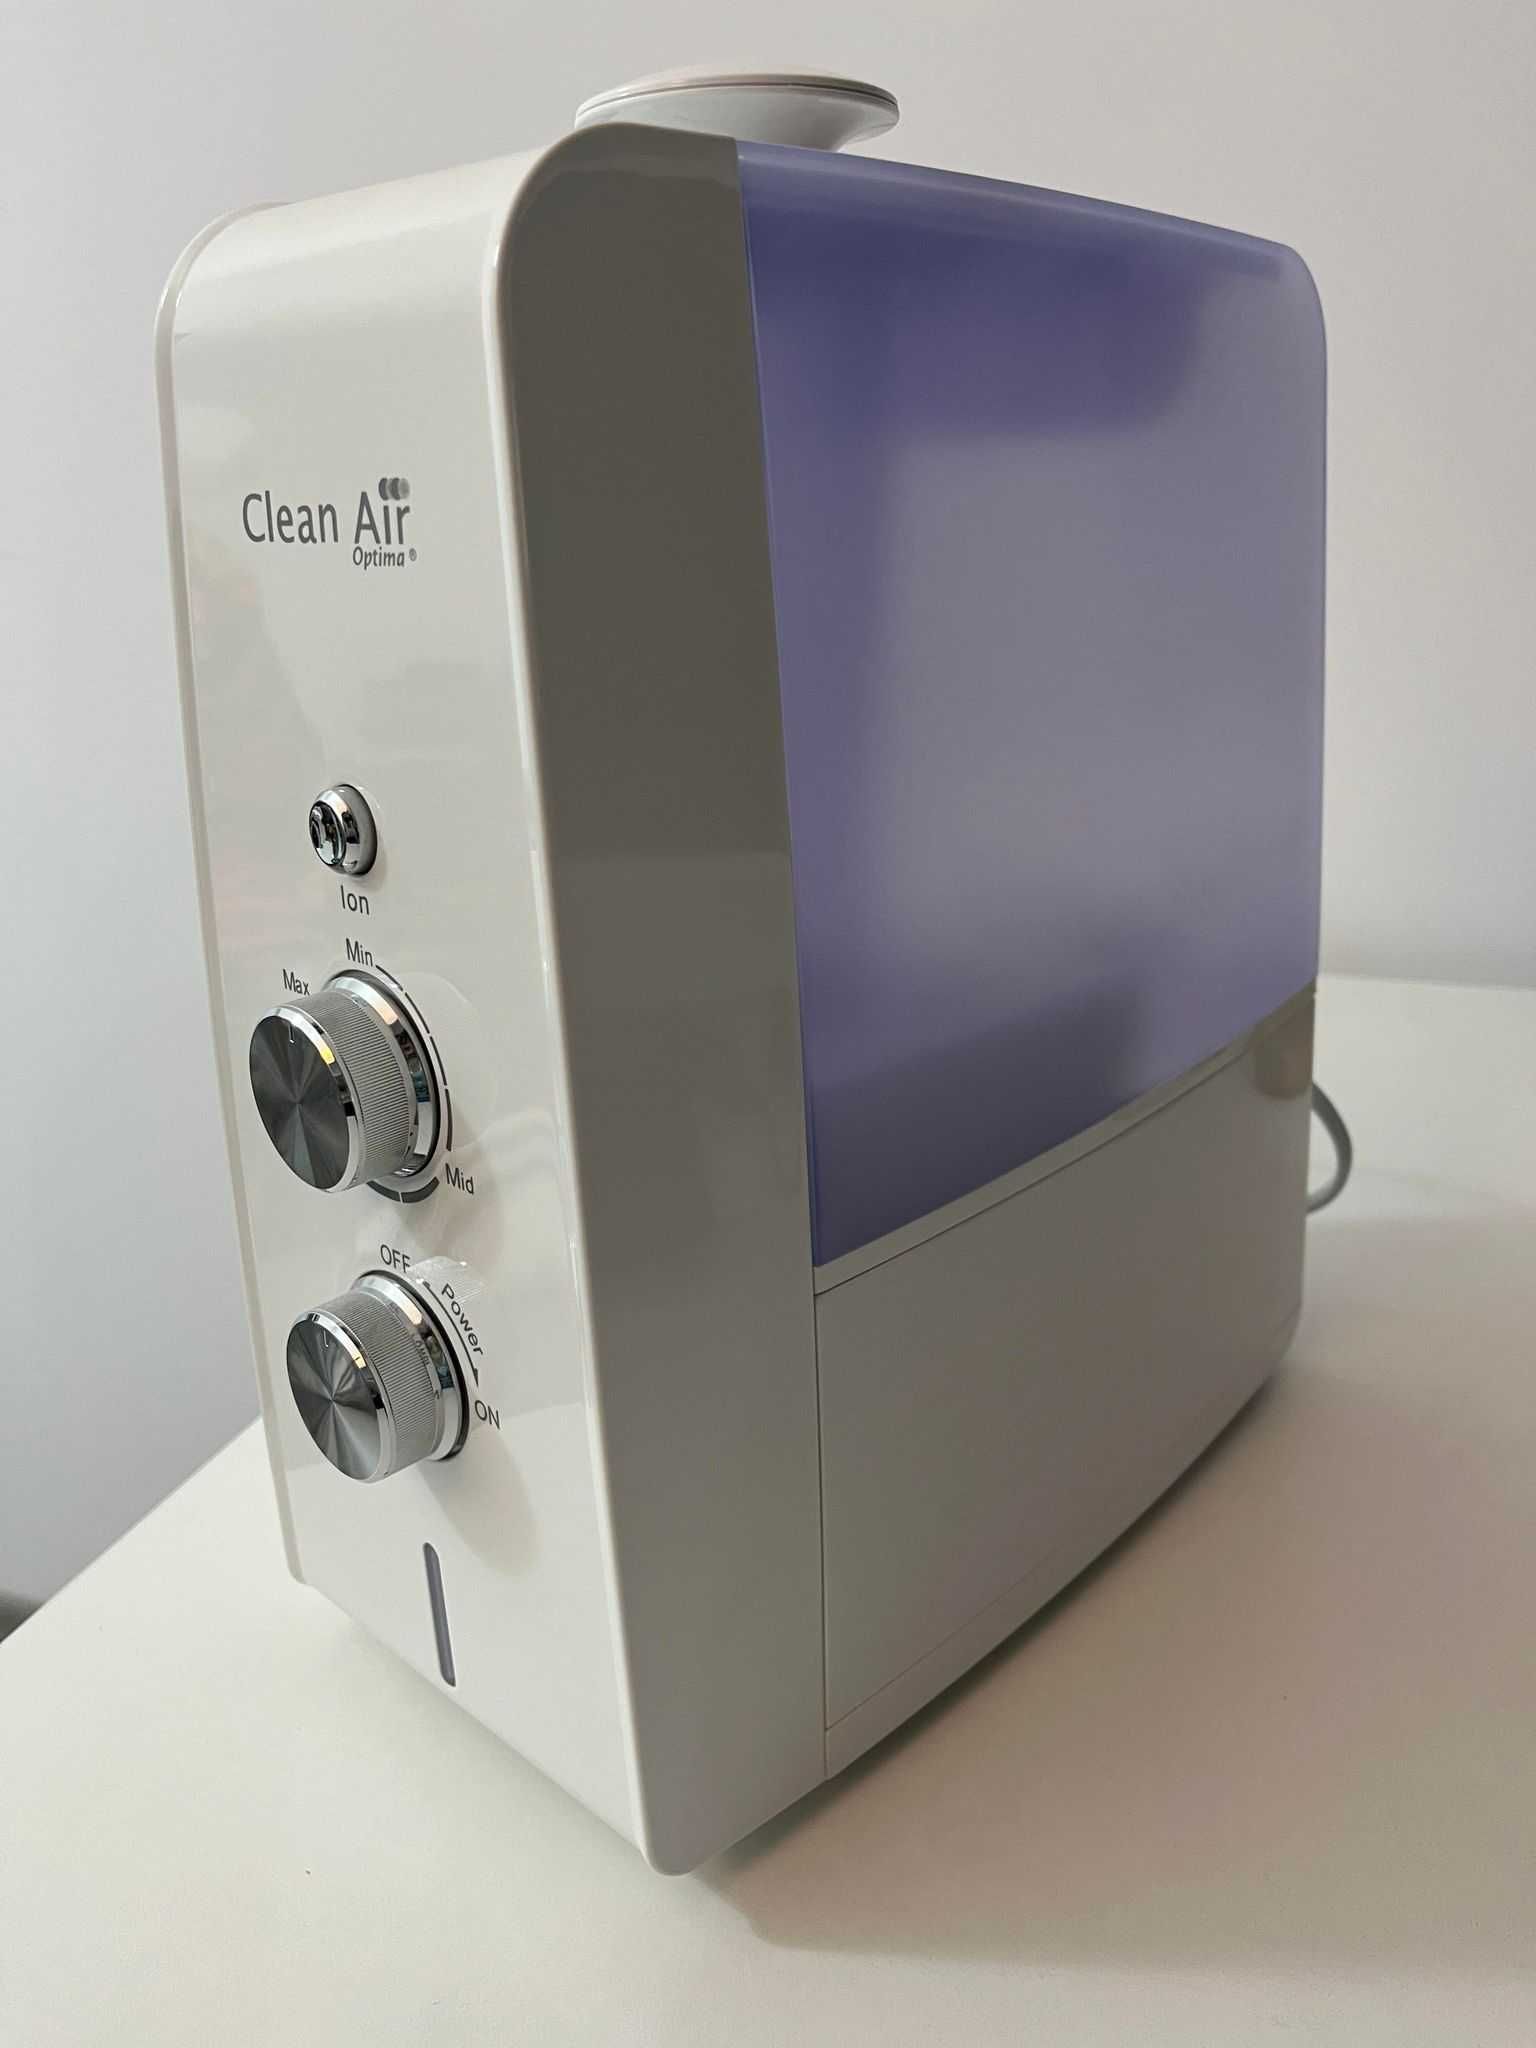 Umidificator Clean Air Optima CA-602